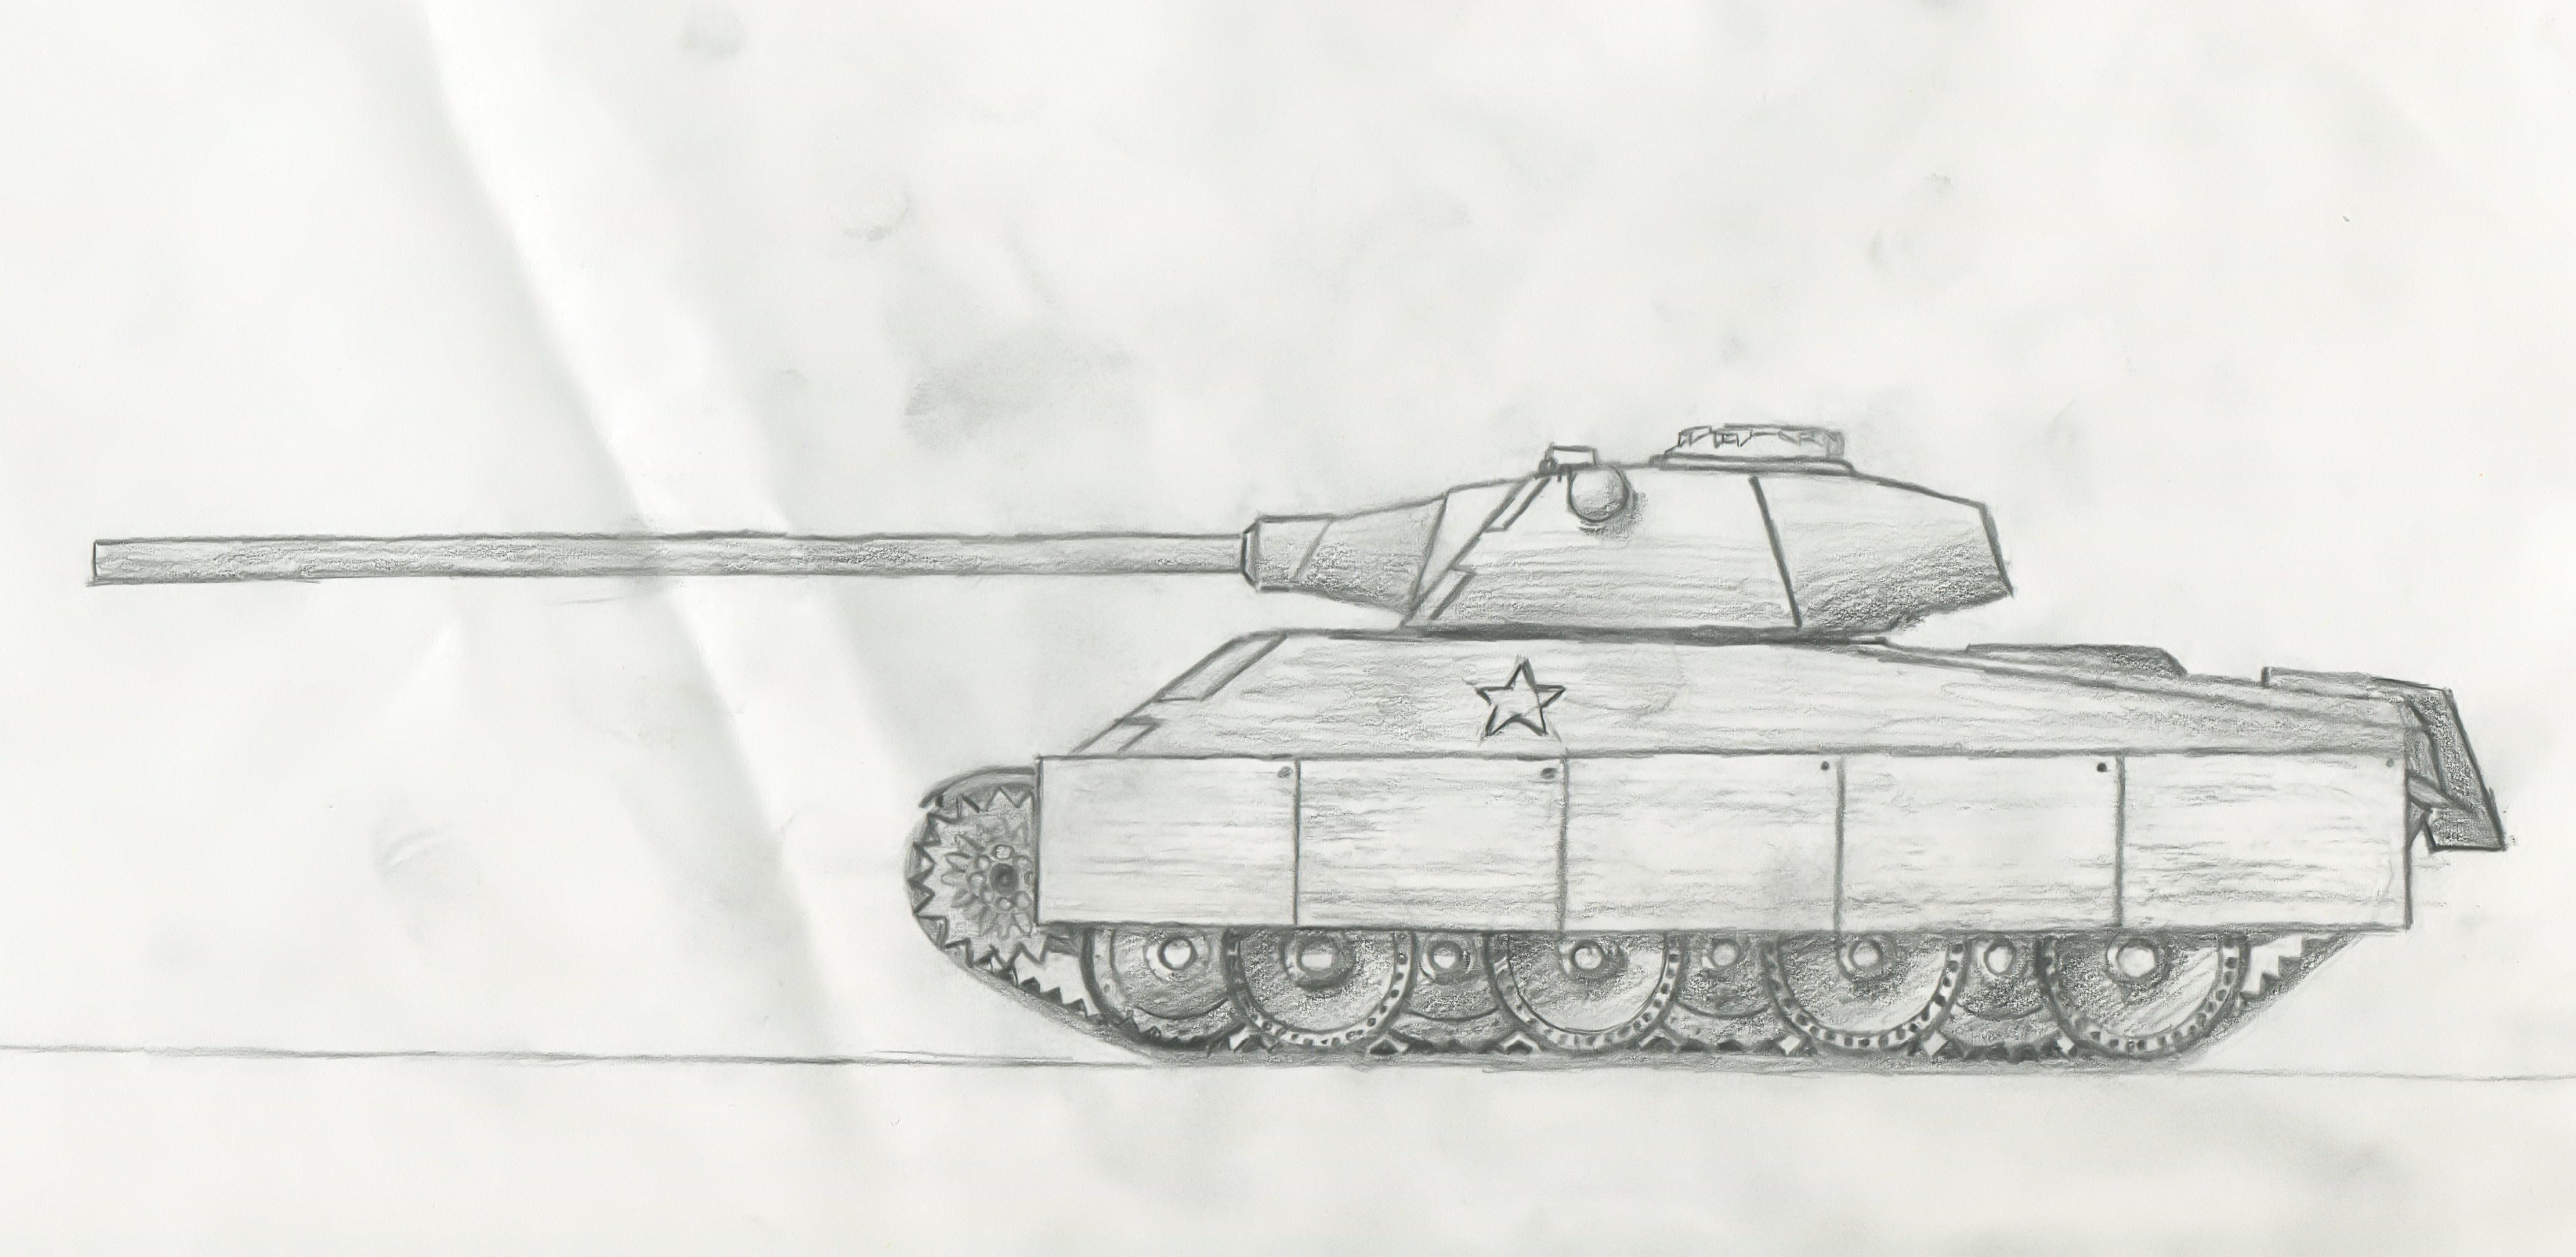 Ис легко. Танк т-34 рисунок карандашом. Танк е100 рисунок карандашом. Танки рисунки карандашом. Рисунок танка карандашом.